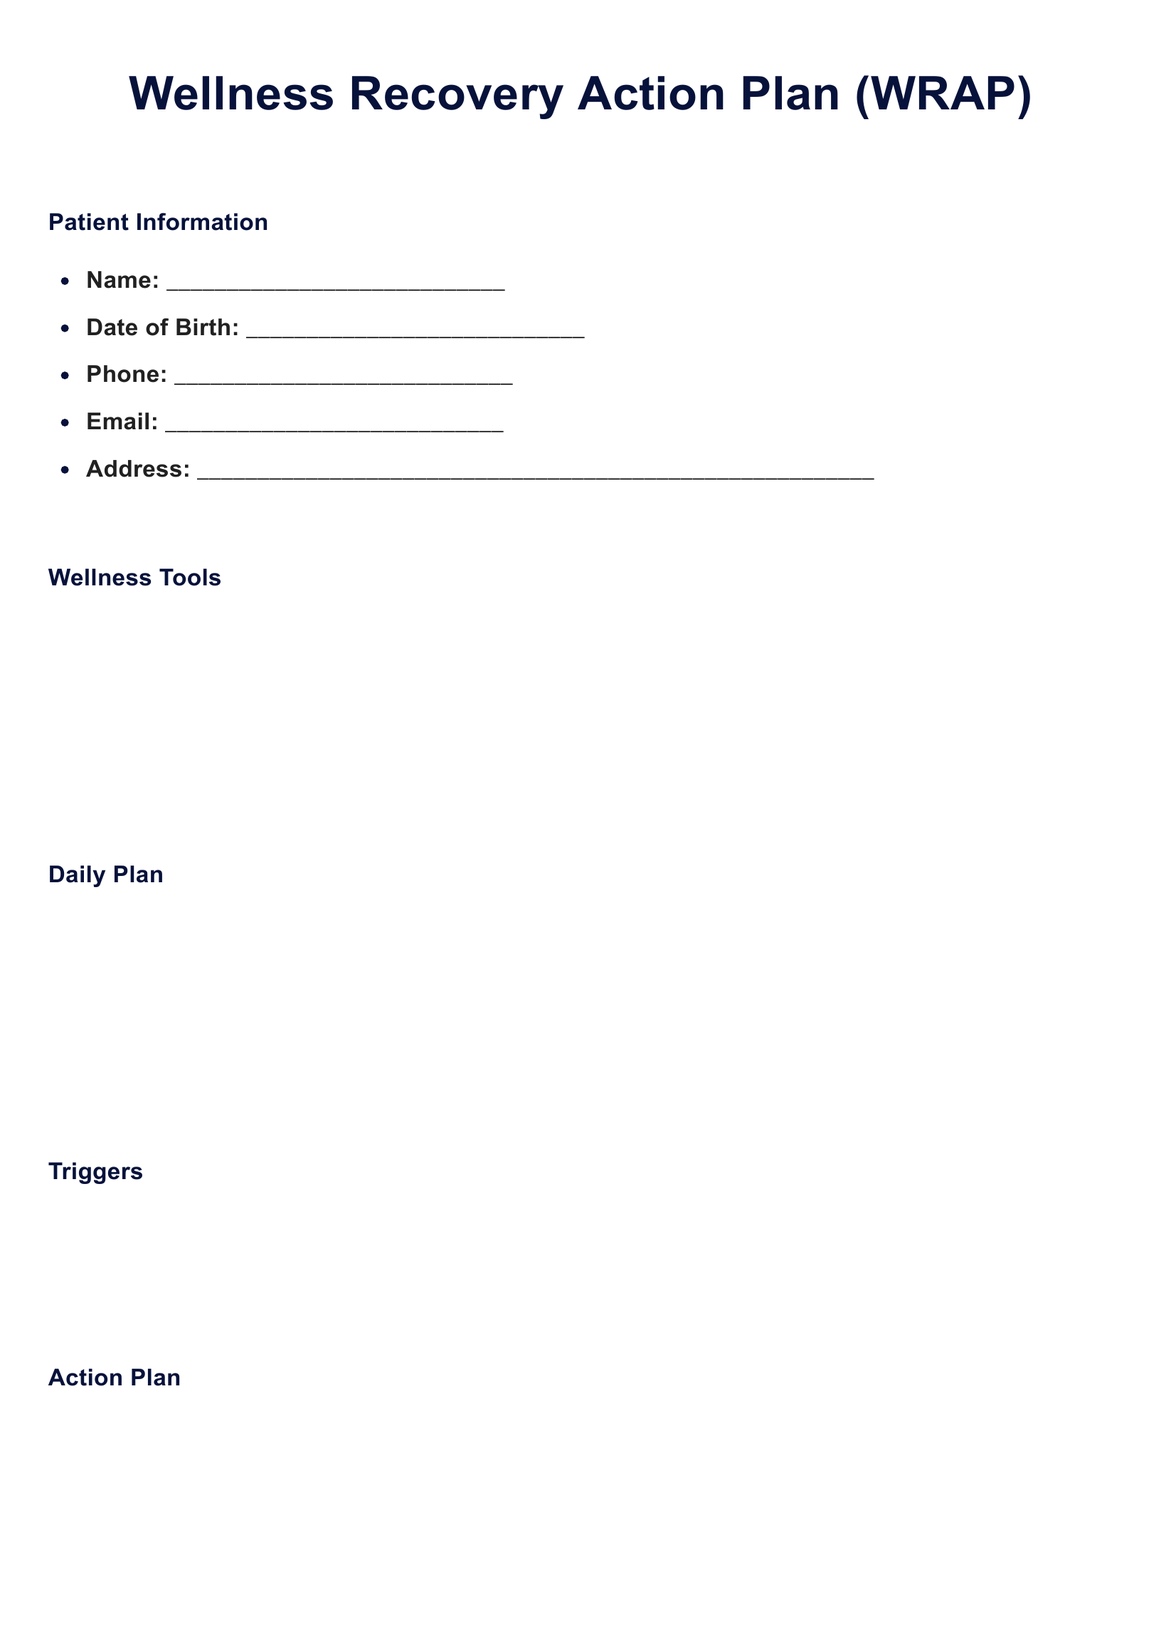 WRAP Plan PDF Example